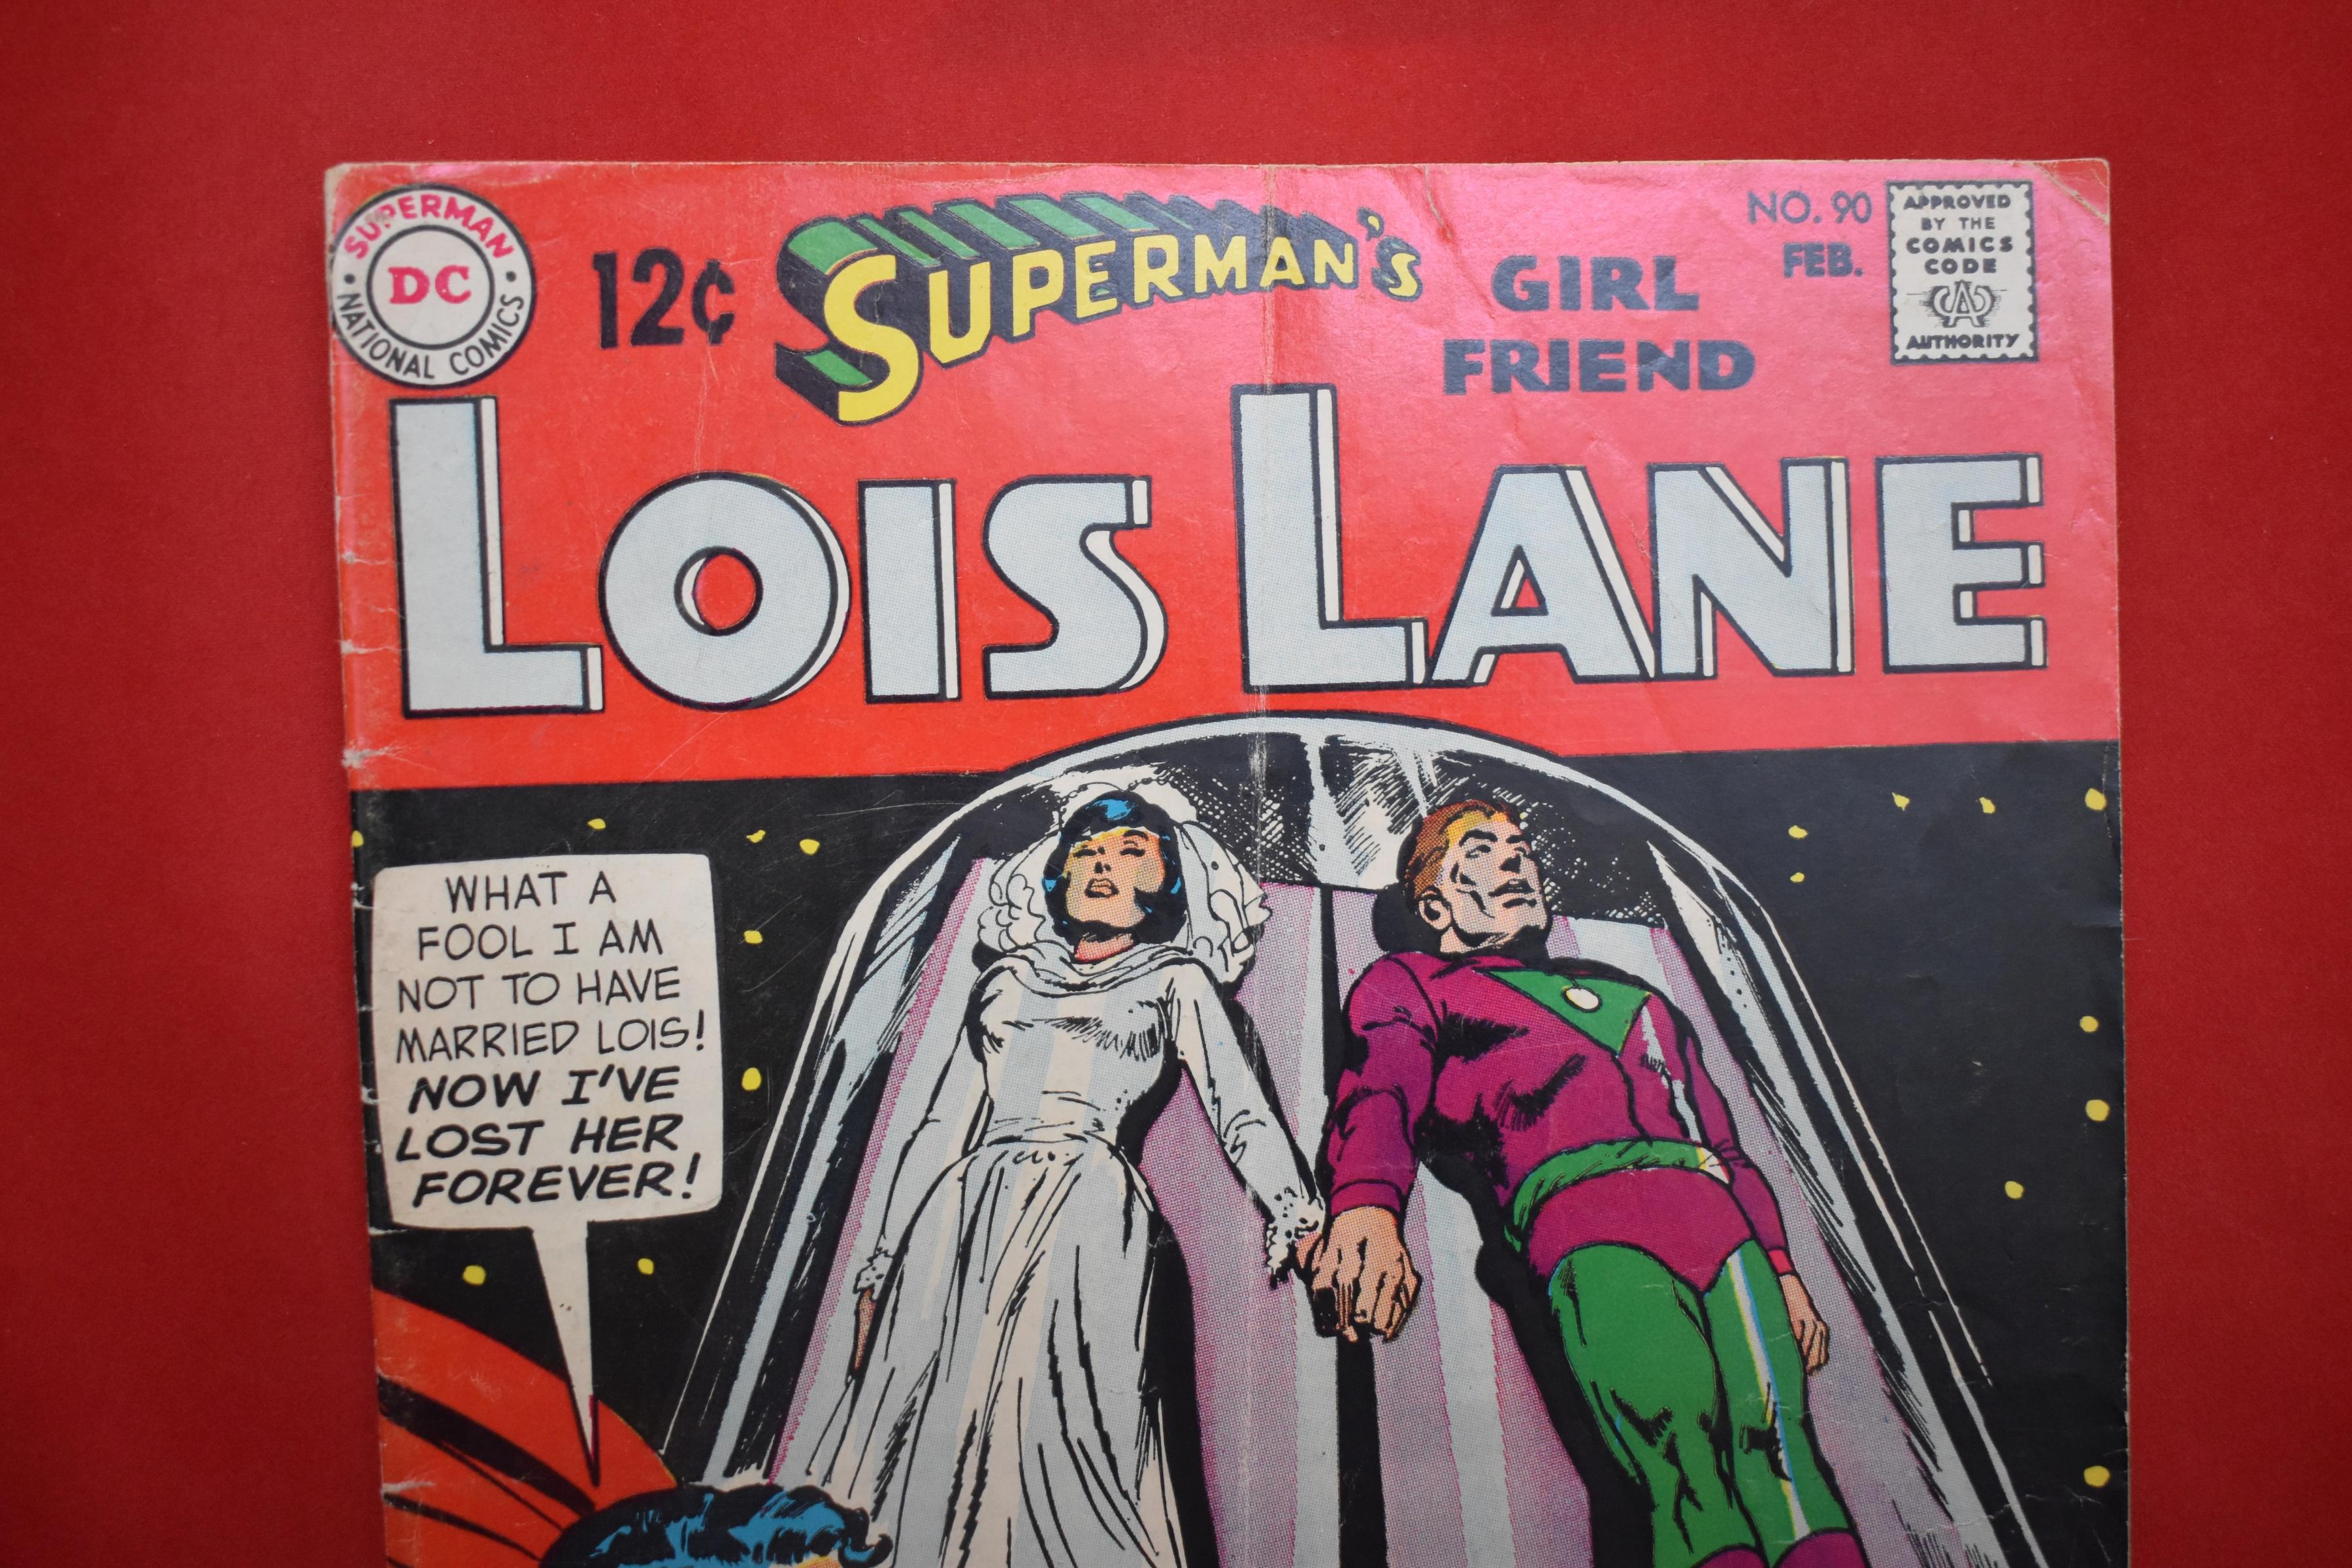 LOIS LANE #90 | LOIS LANE'S FUTURE HUSBAND - NEAL ADAMS - 1969 | *SOLID - CREASING - SEE PICS*